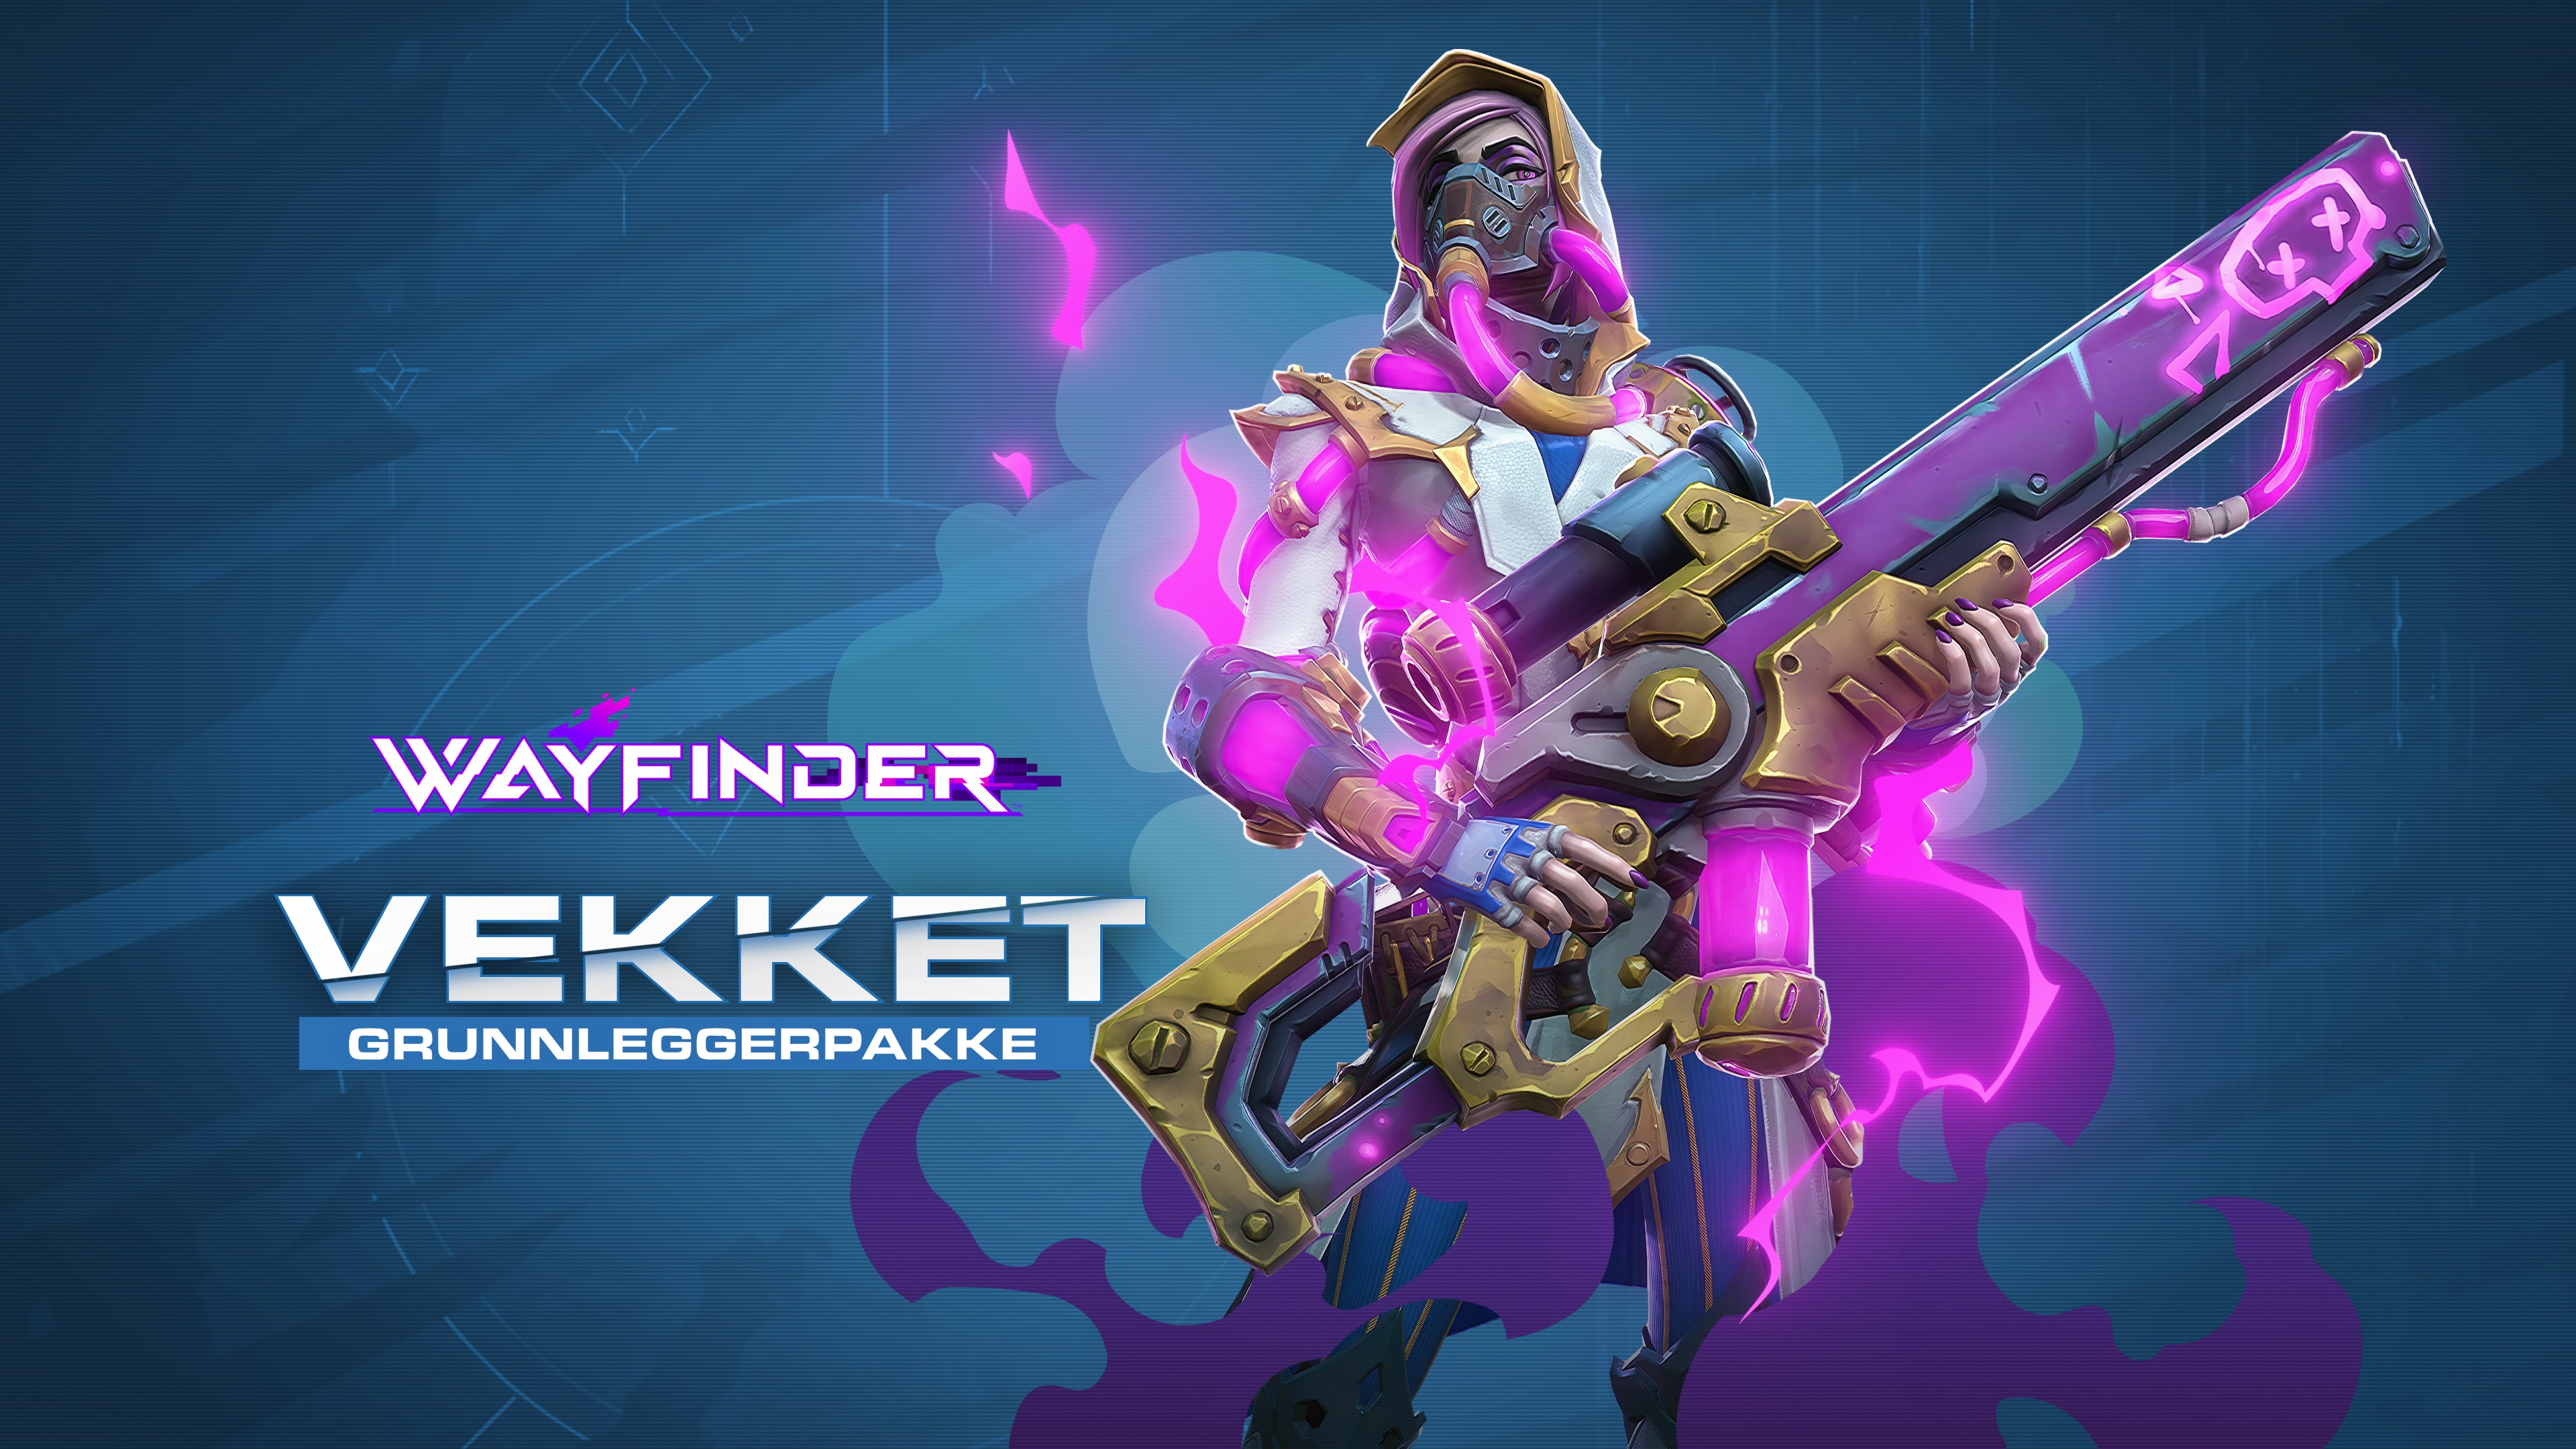 Wayfinder: Awakened Bundle